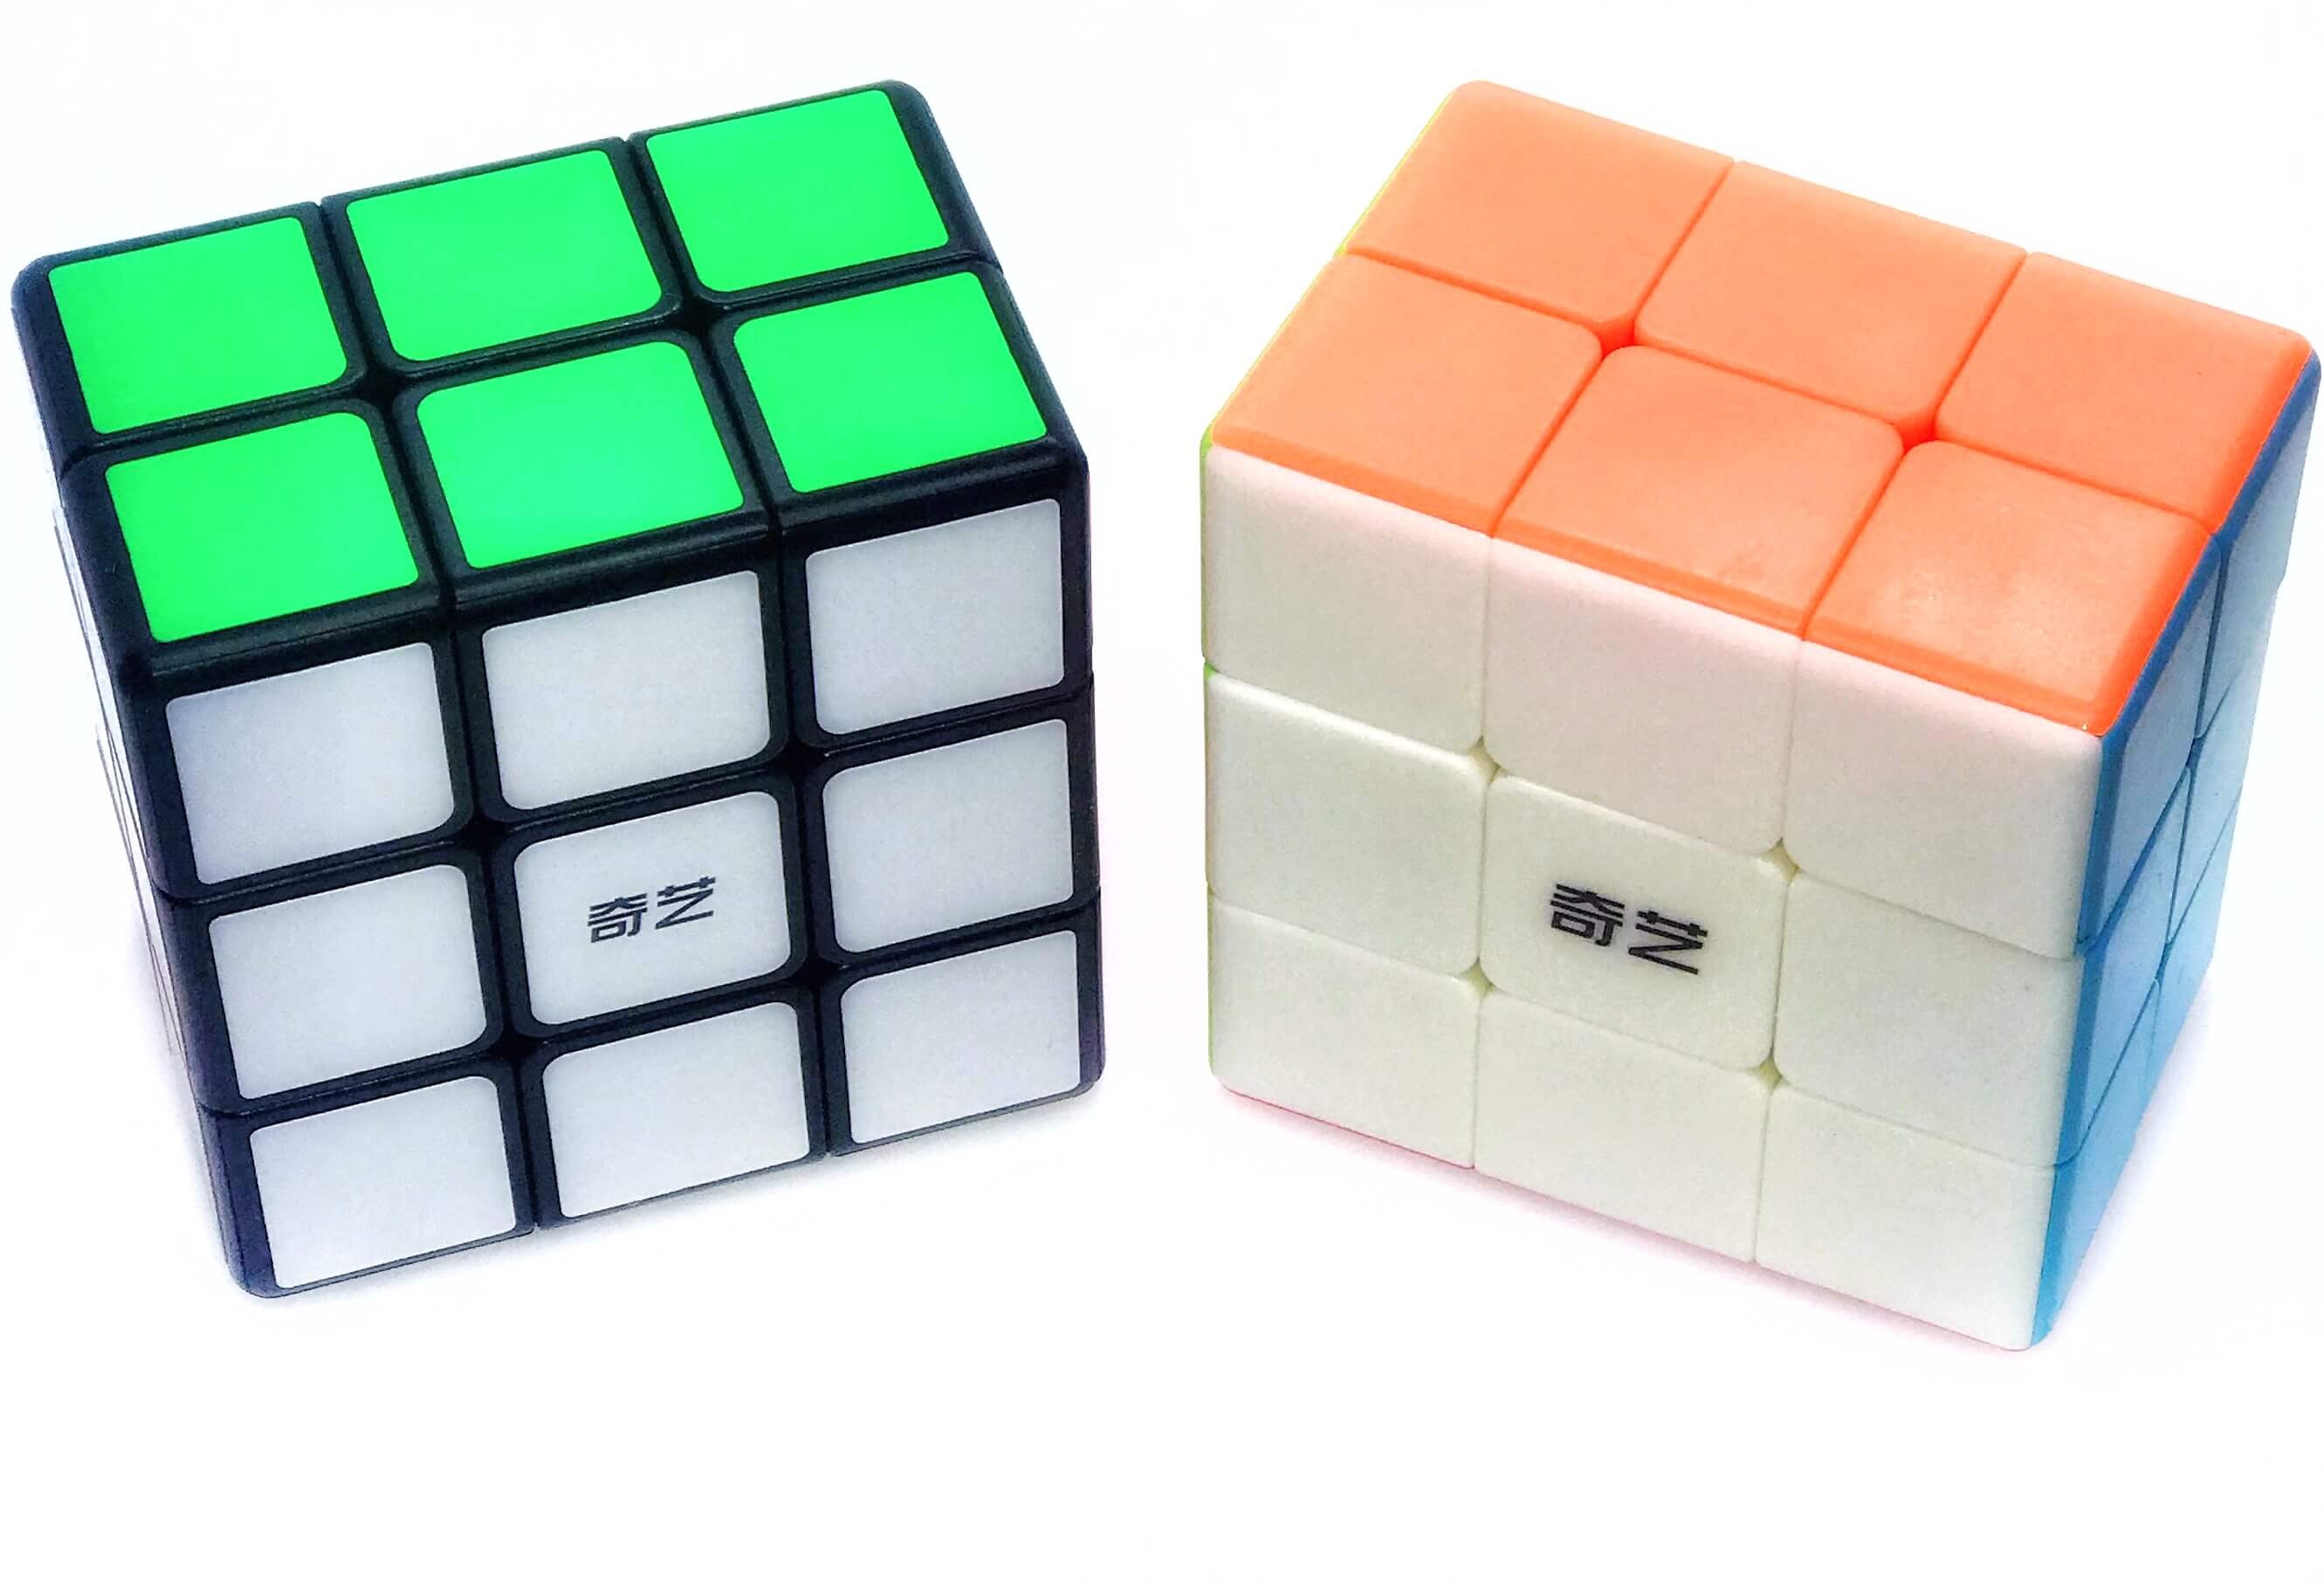 3x3x2 rubik's cube